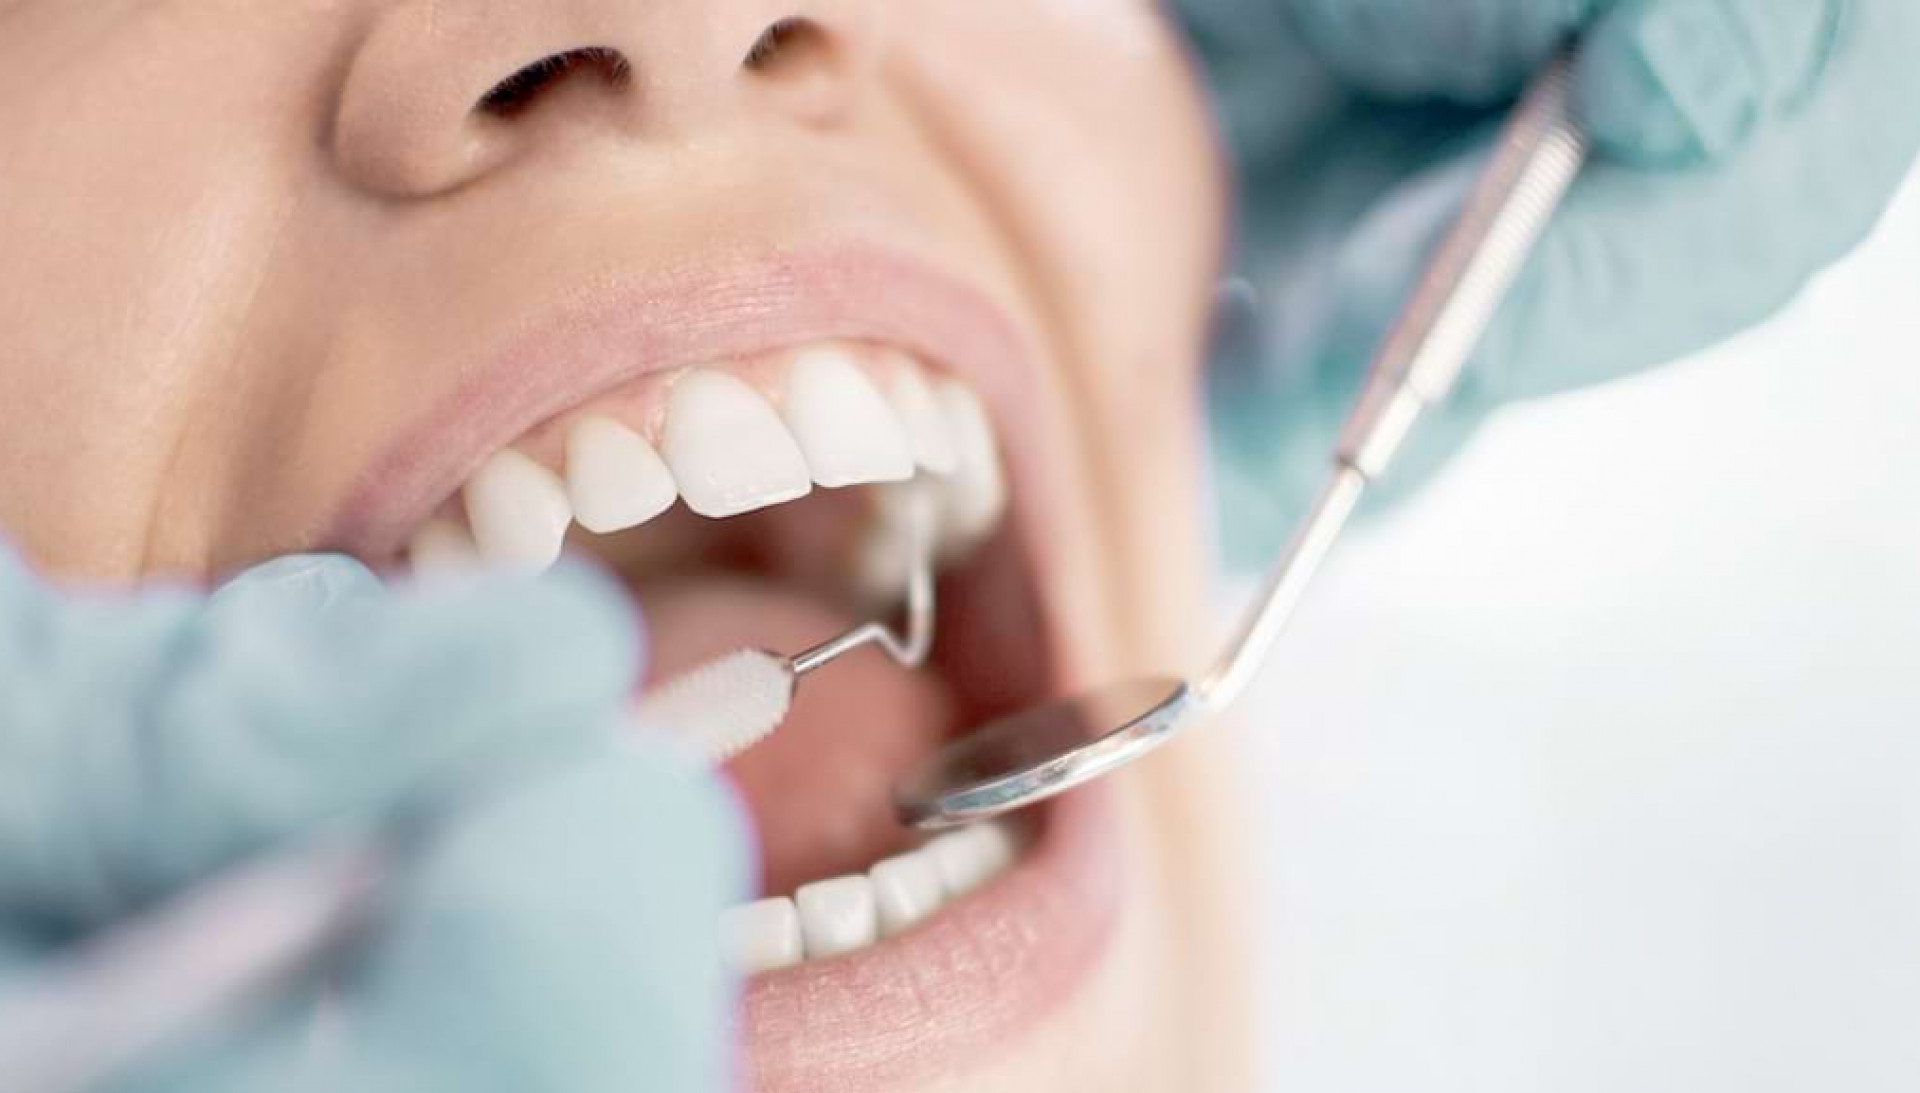 Dental treatment detail